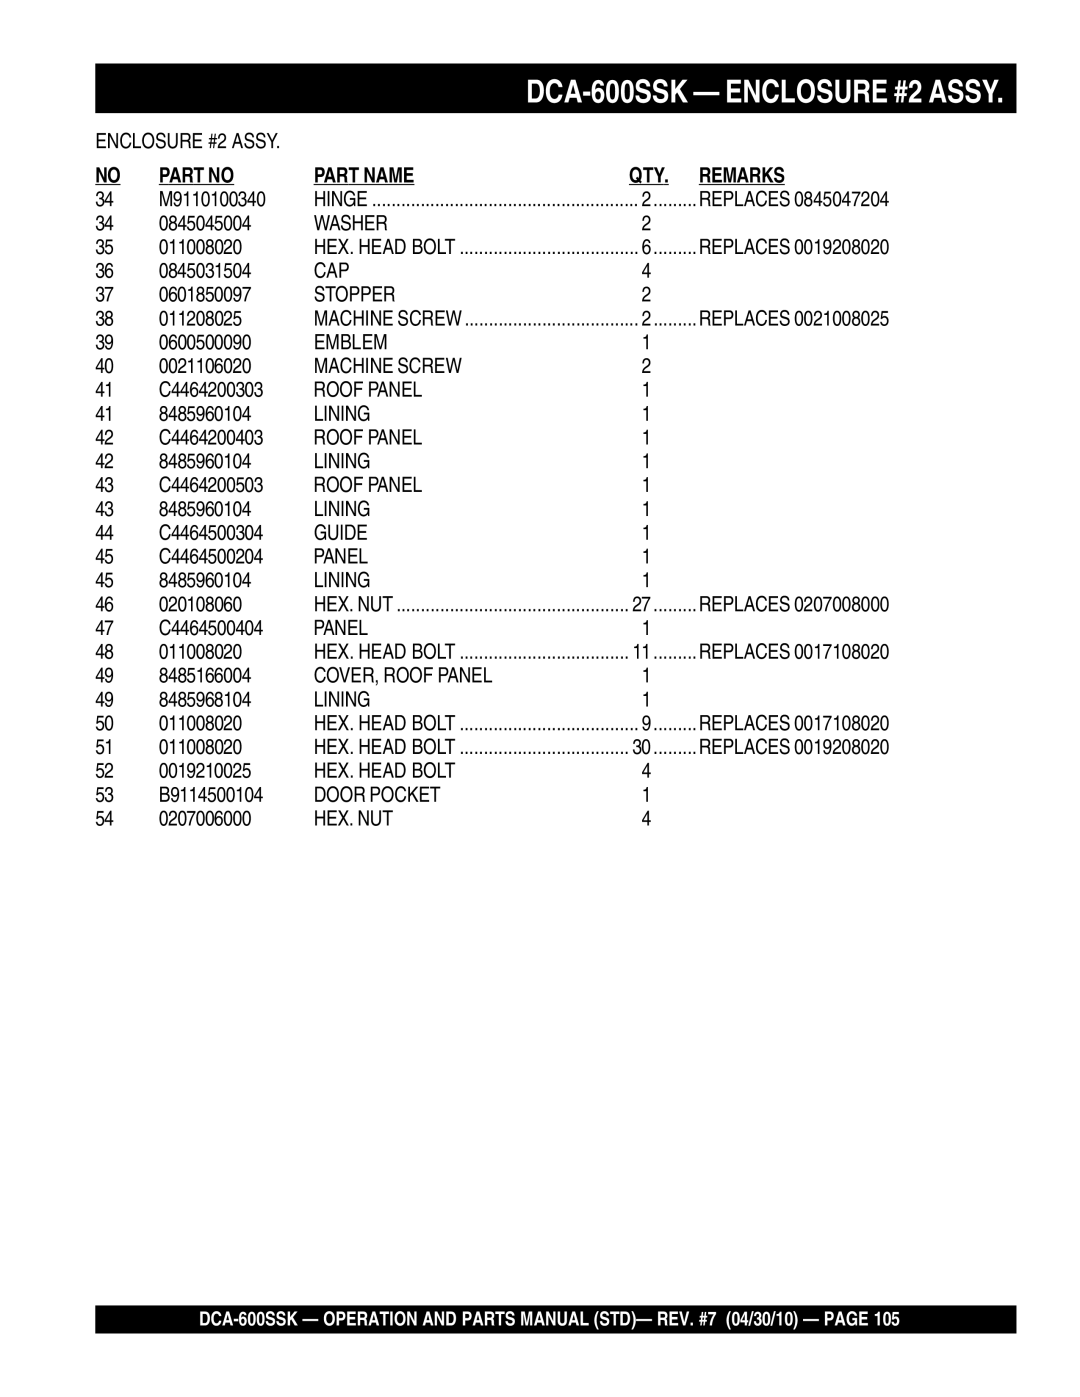 Multiquip operation manual DCA-600SSK - ENCLOSURE #2 ASSY, Part Name, Remarks 